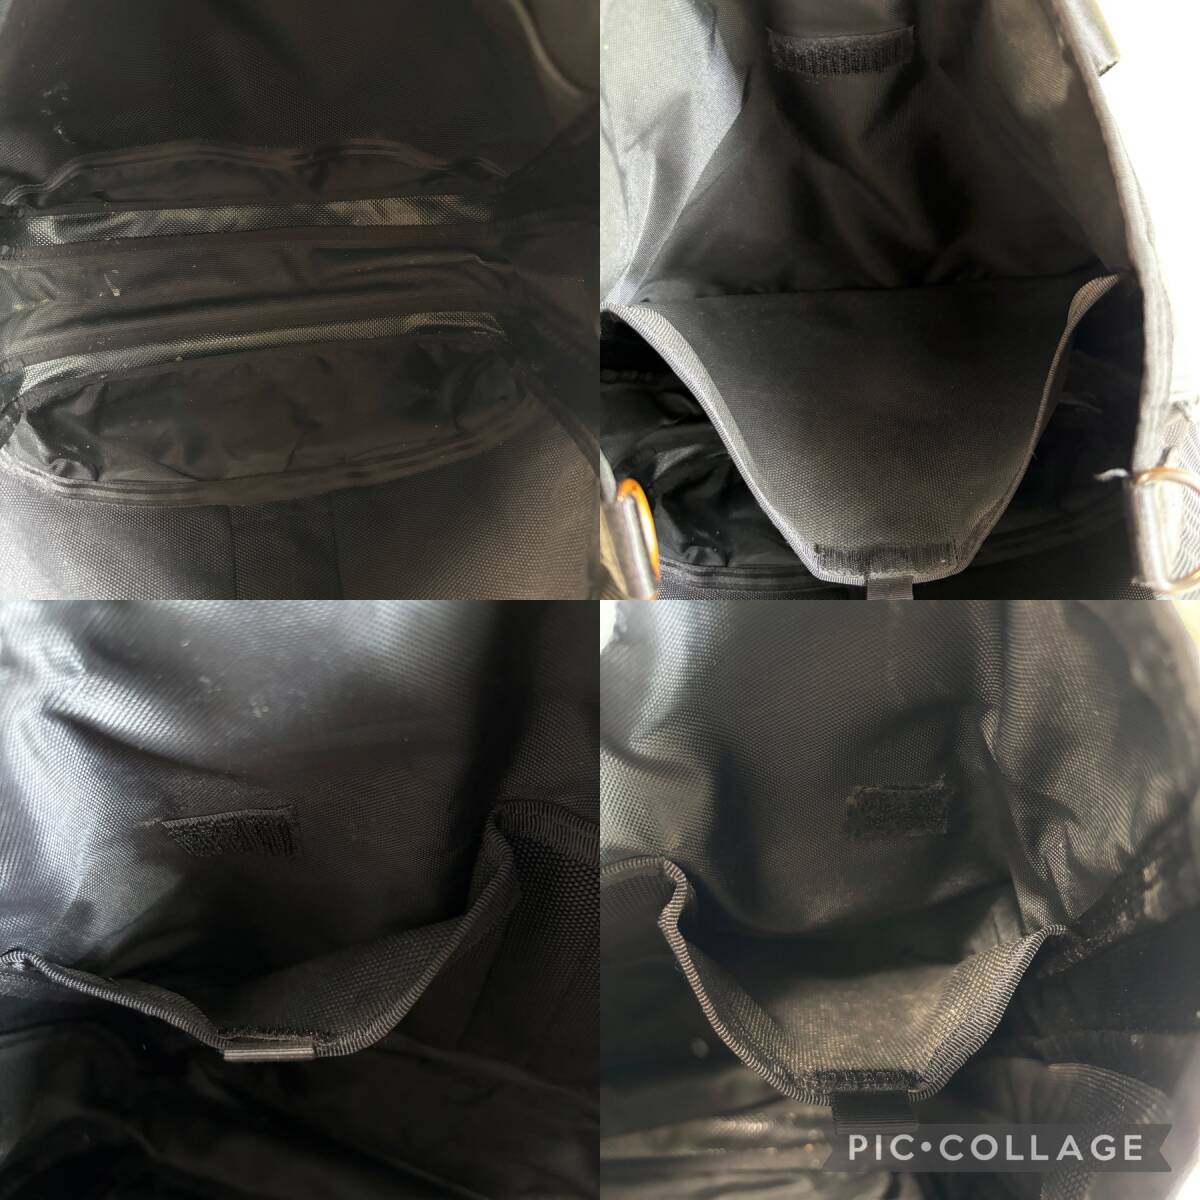 1 jpy ~ PORTER HEAT tote bag business bag shoulder .. shoulder bag Porter heat men's black black Yoshida bag commuting * going to school *